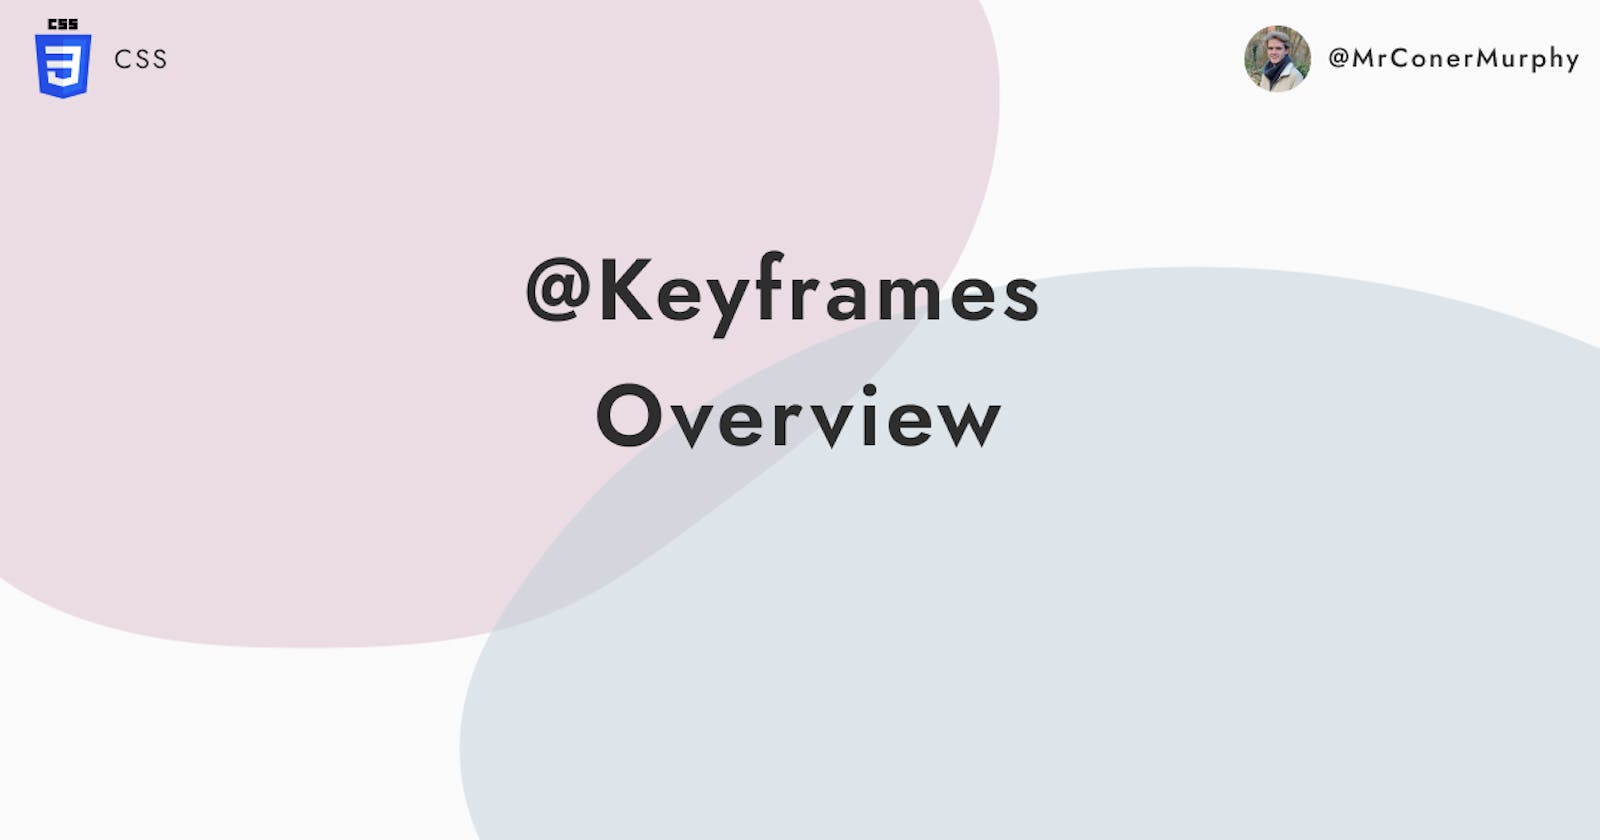 CSS Keyframes Overview